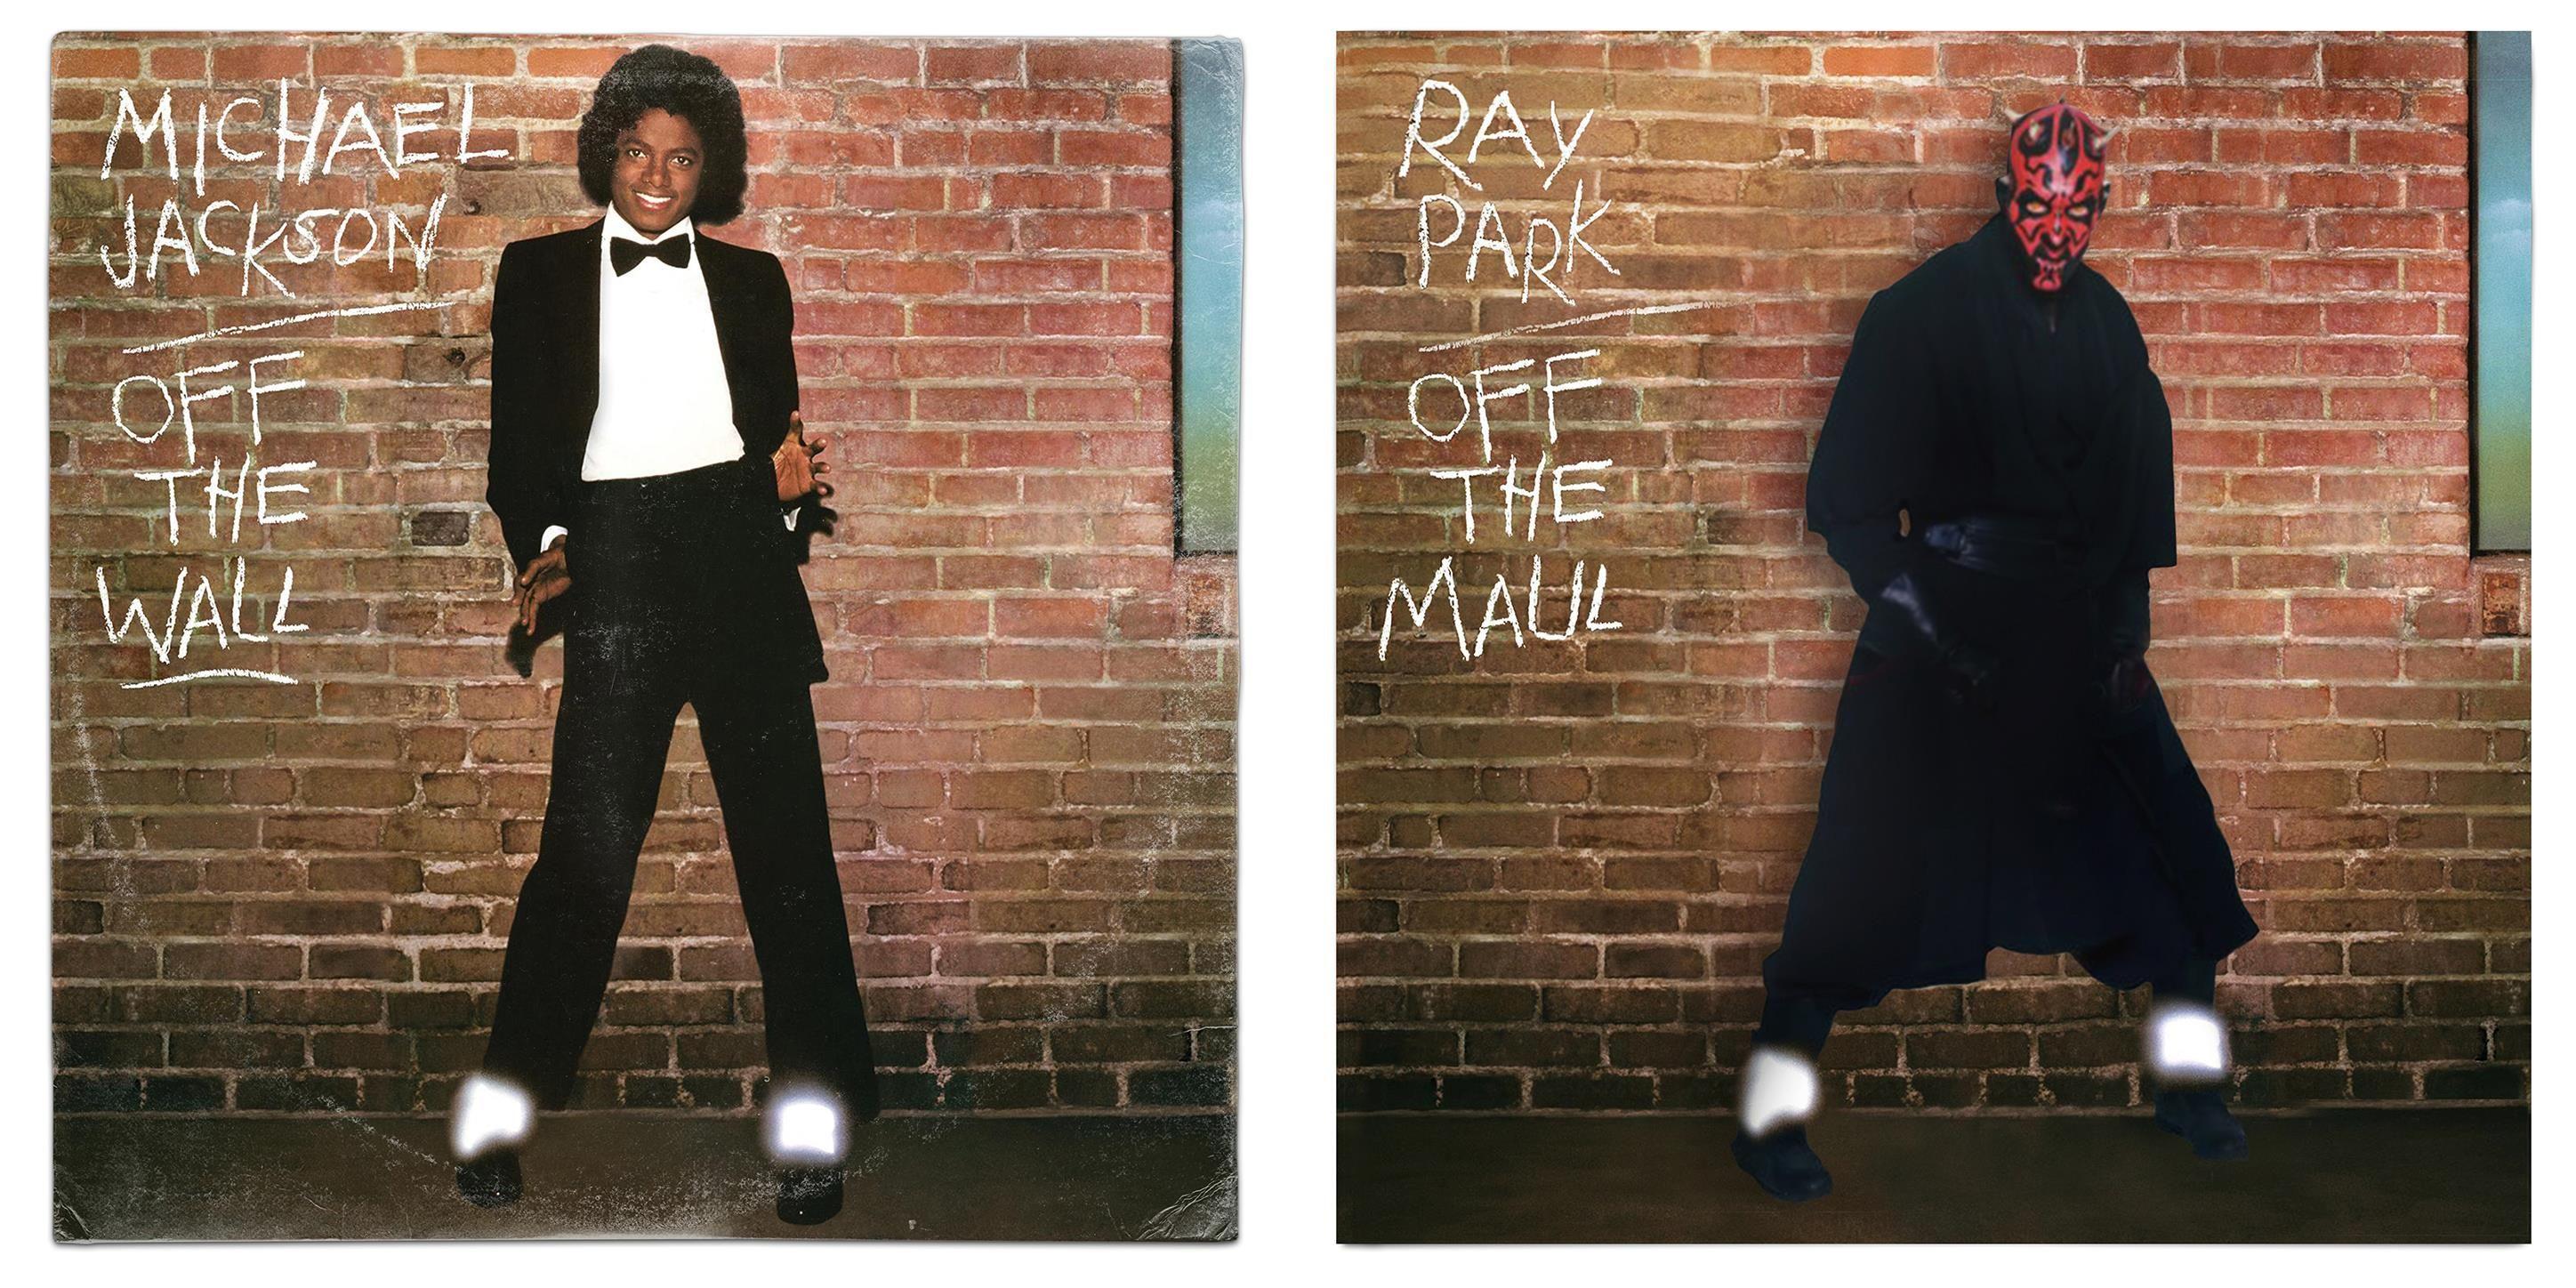 Off the Wall Album Logo - Star Wars Darth Maul / Michael Jackson Off the Wall Vinyl Album ...